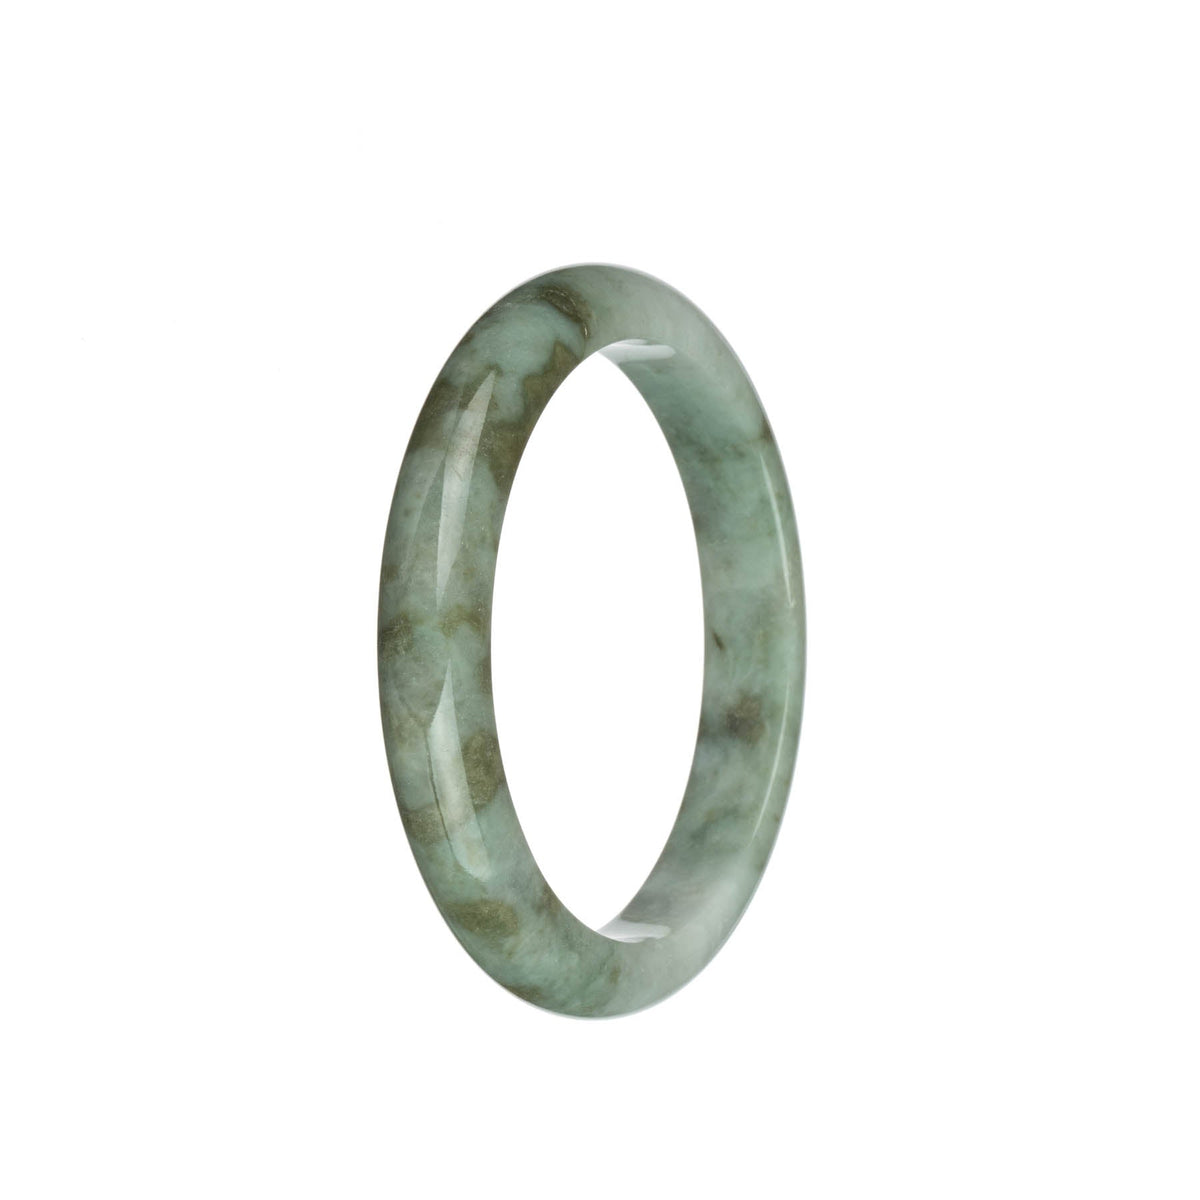 Genuine Grade A White and Light Green with Brown Patterns Jadeite Jade Bracelet - 57mm Semi Round